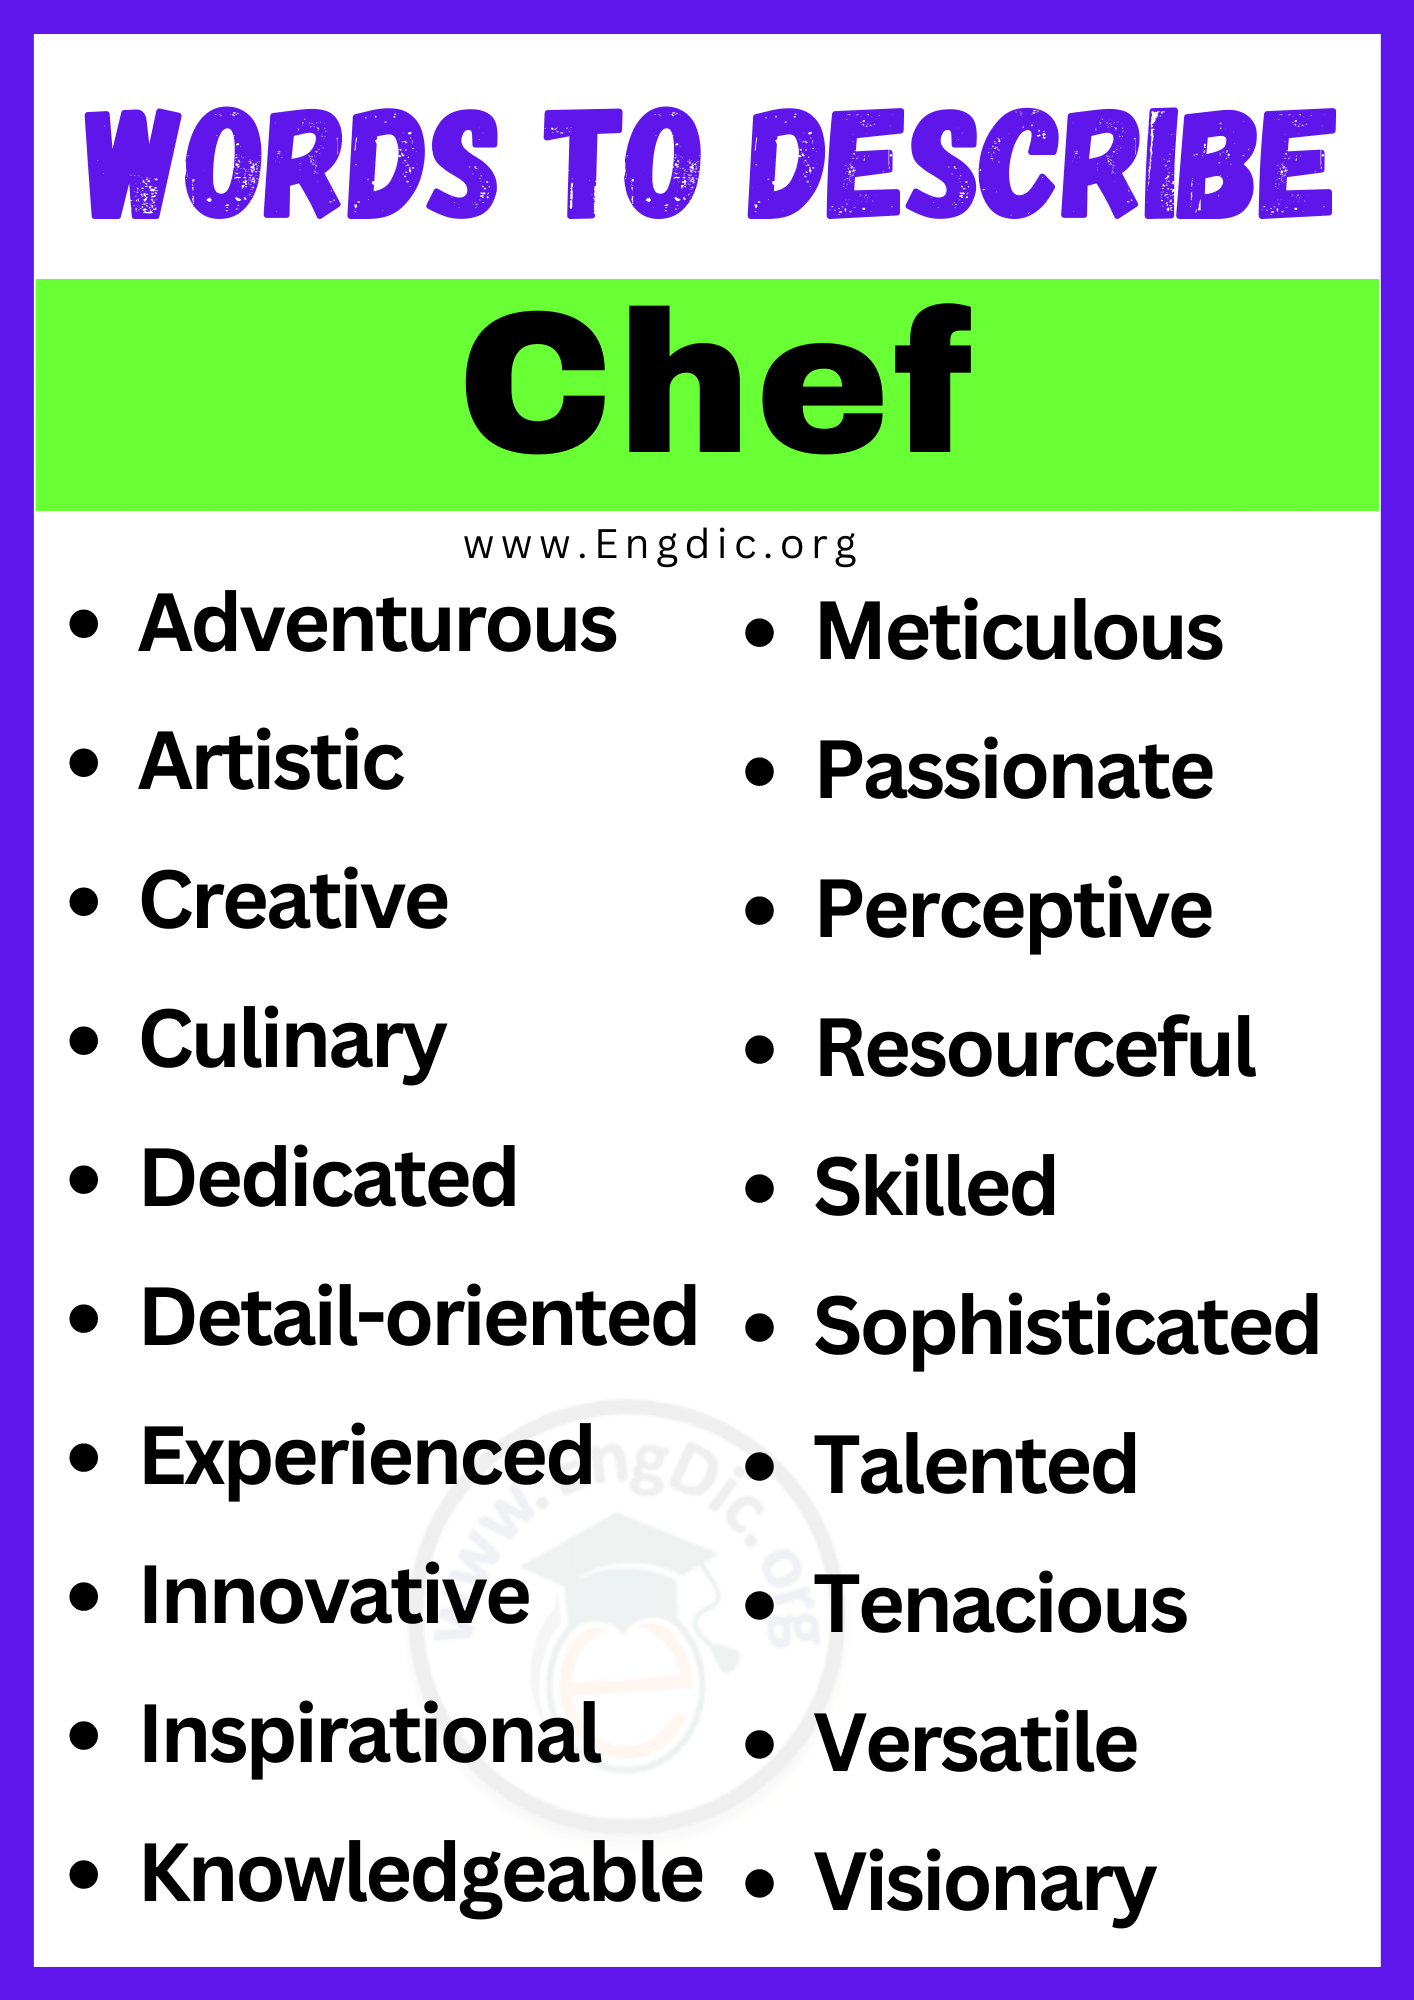 Words to Describe Chef (1)